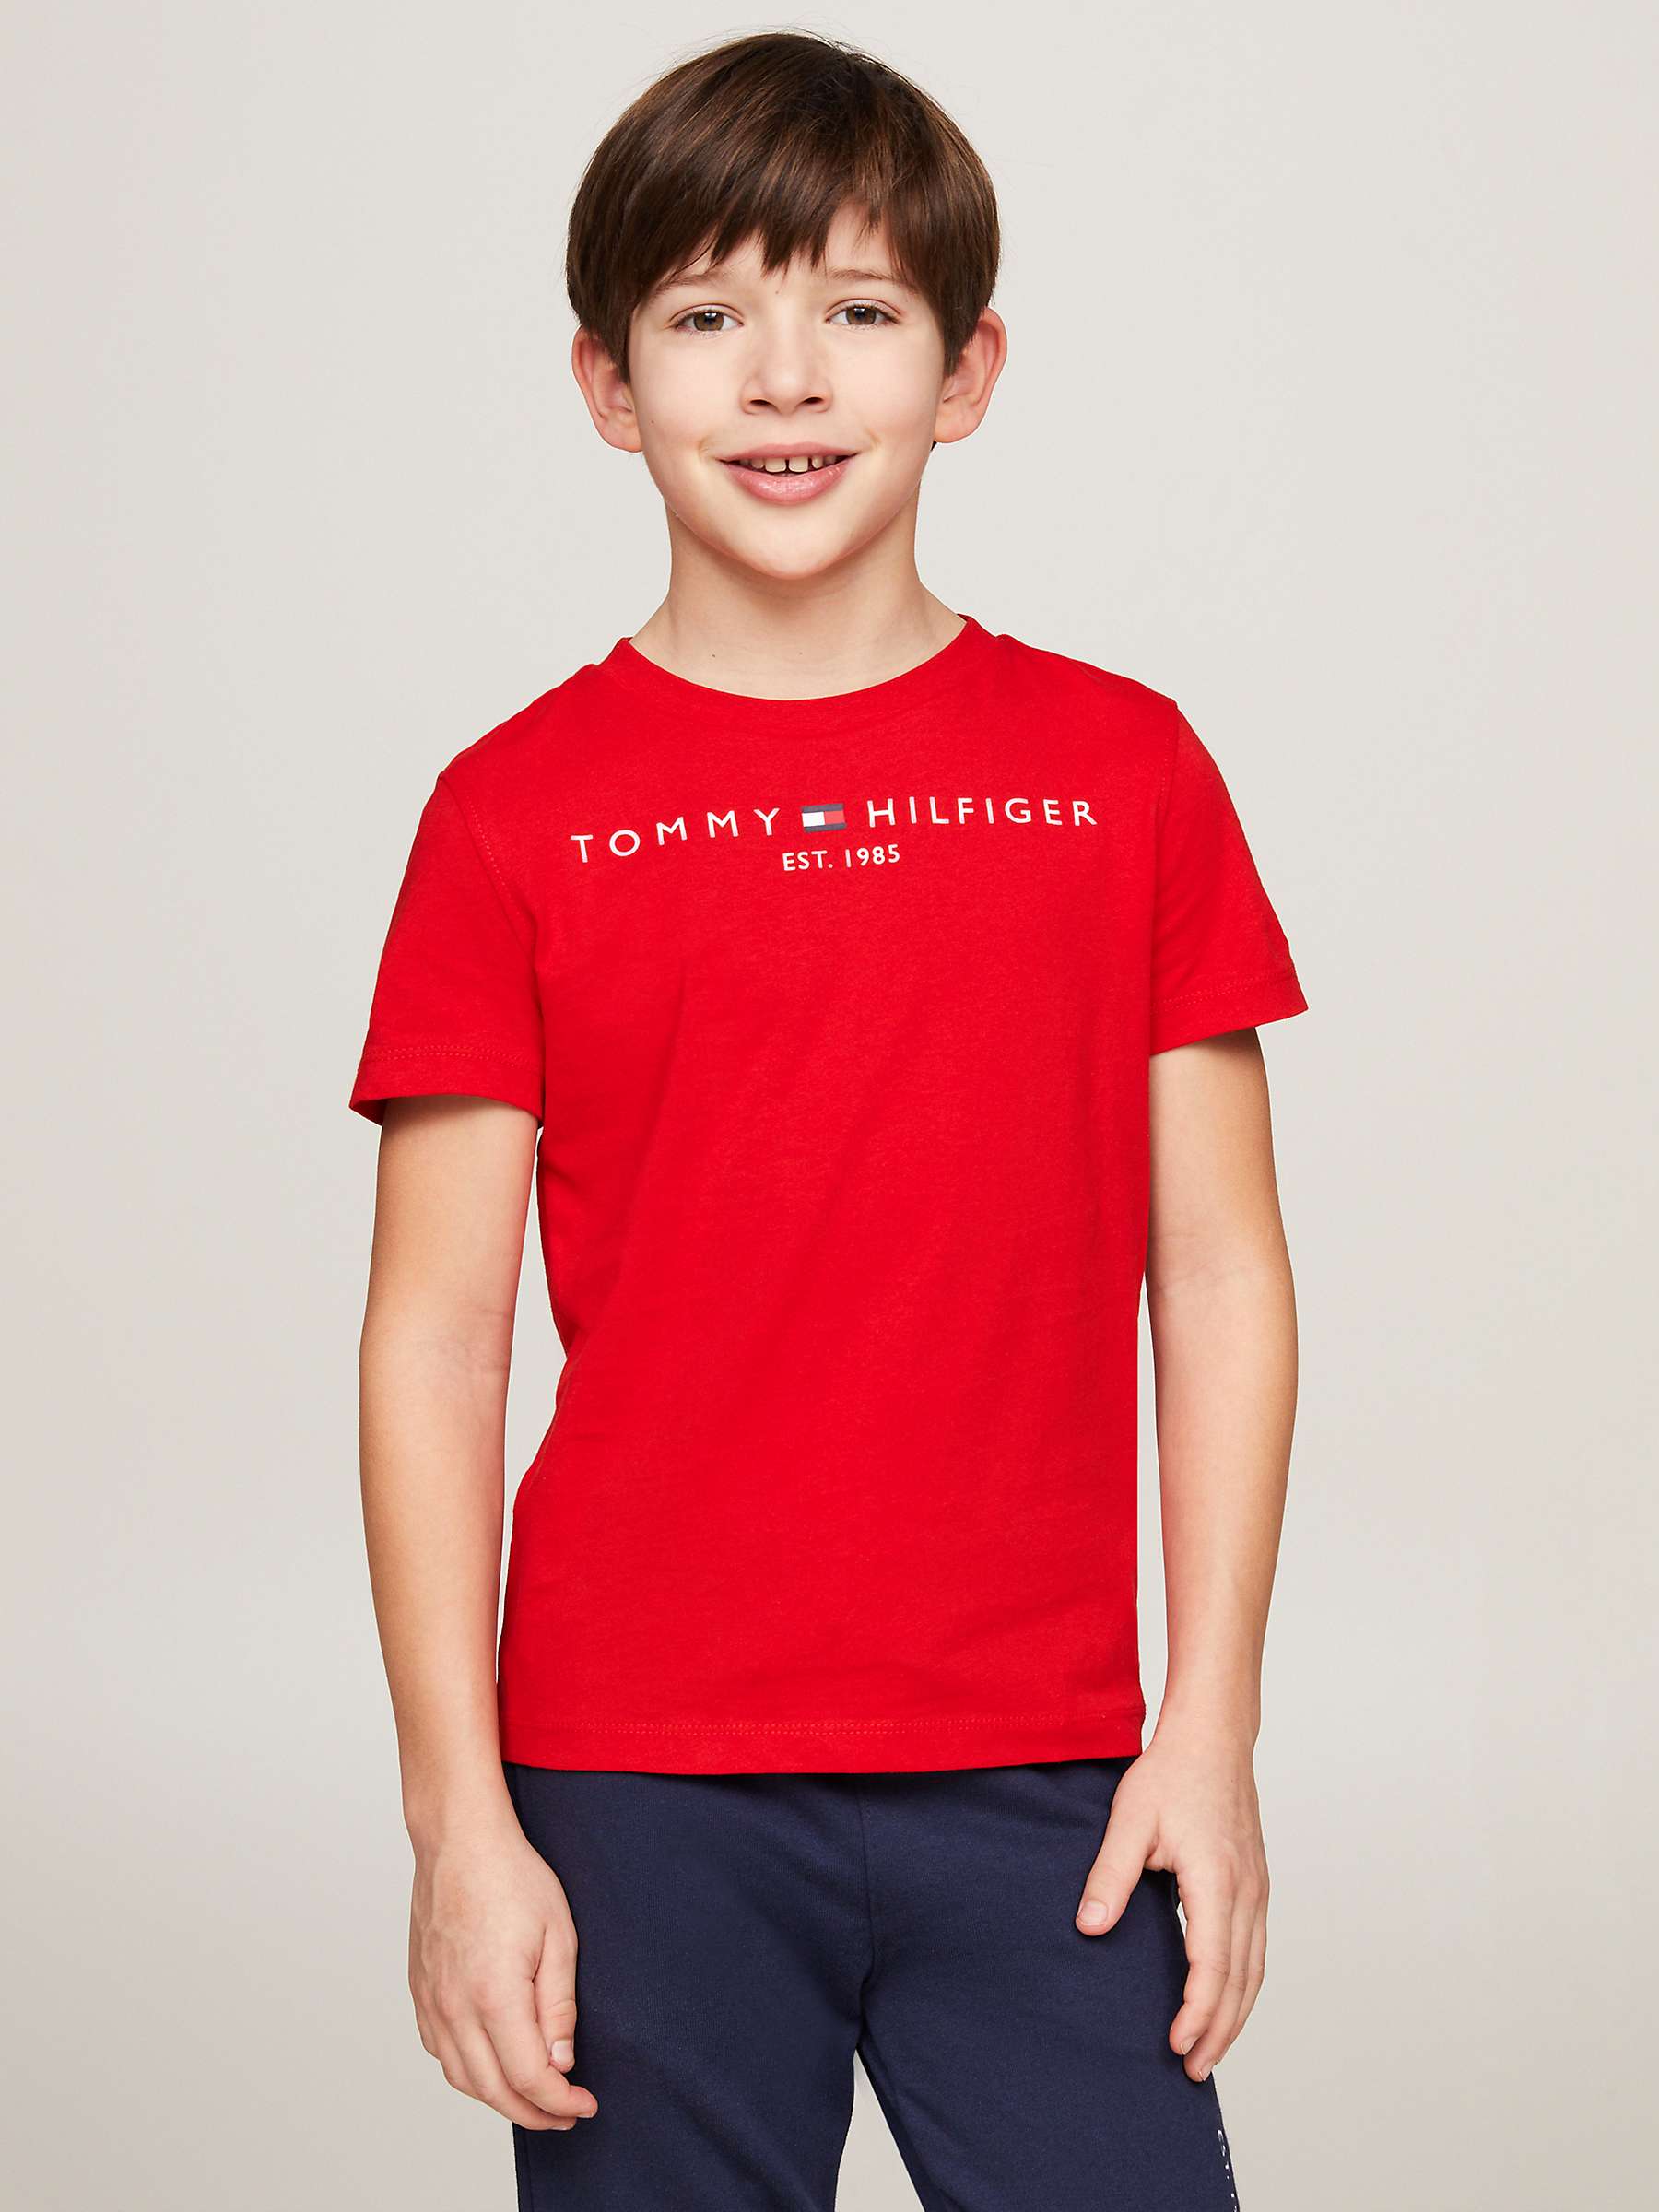 Tommy Hilfiger Women's Performance T-Shirt – Lightweight Cotton Graphic Tees